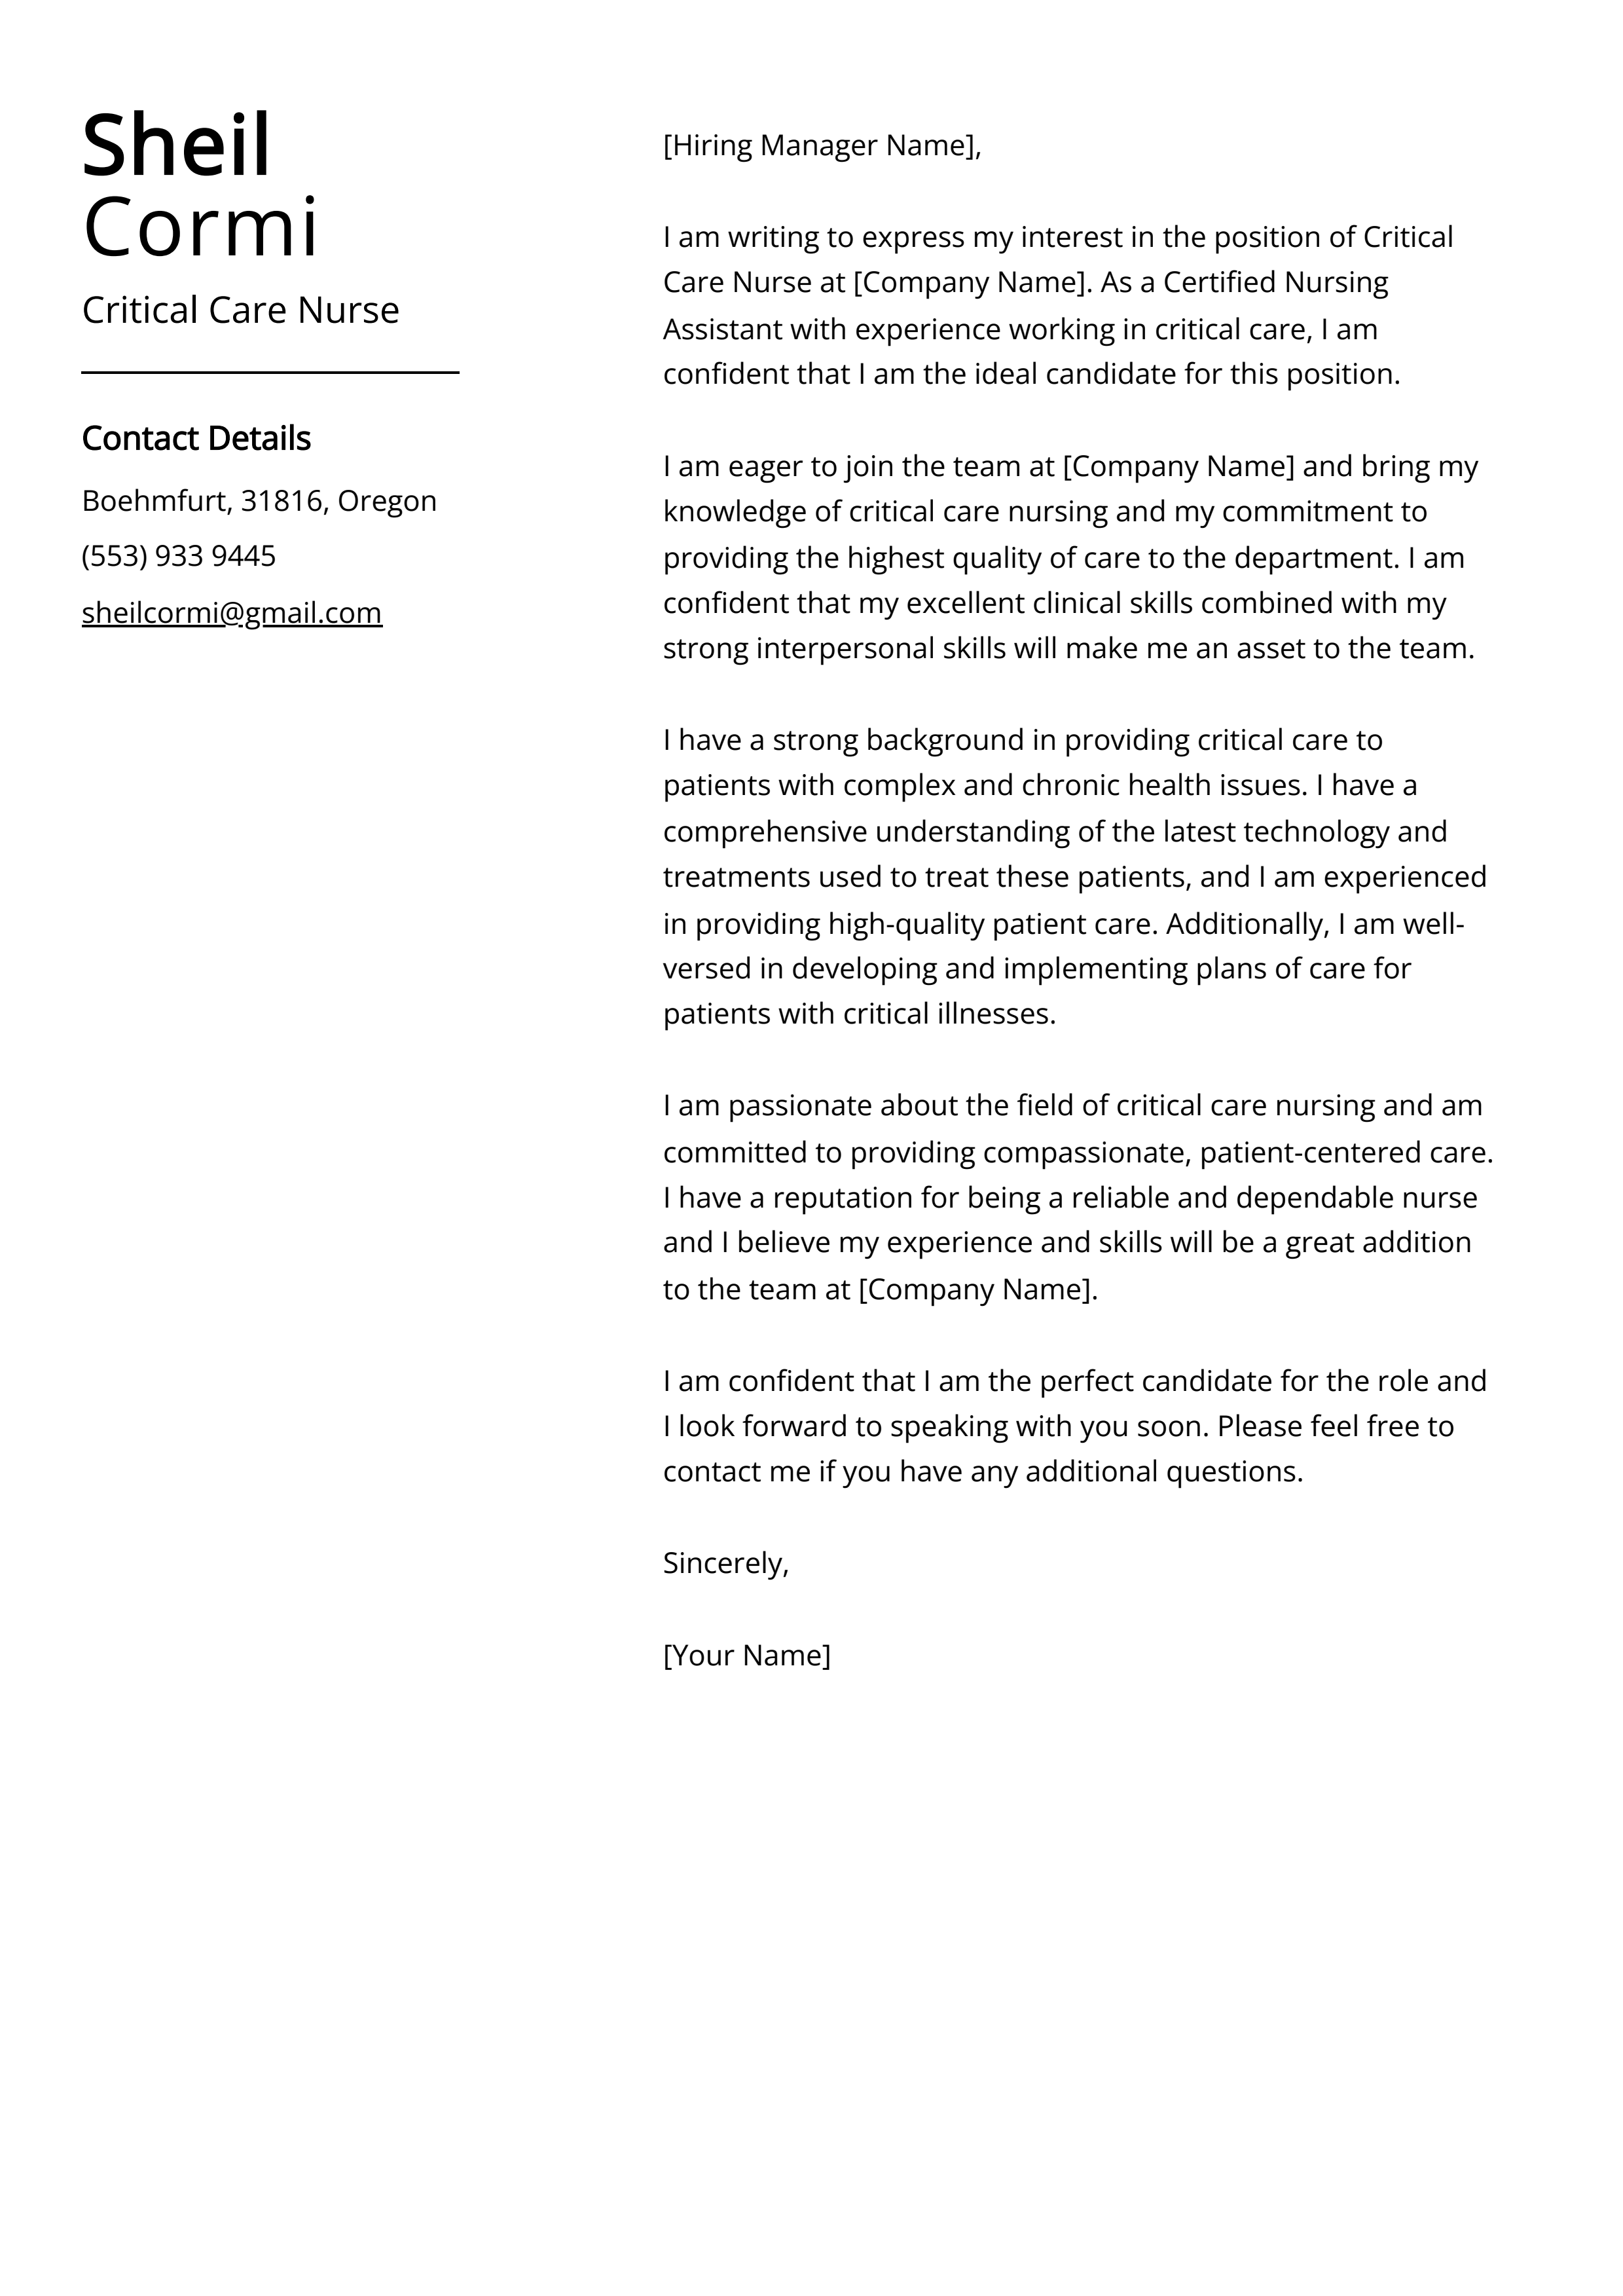 Critical Care Nurse Cover Letter Example